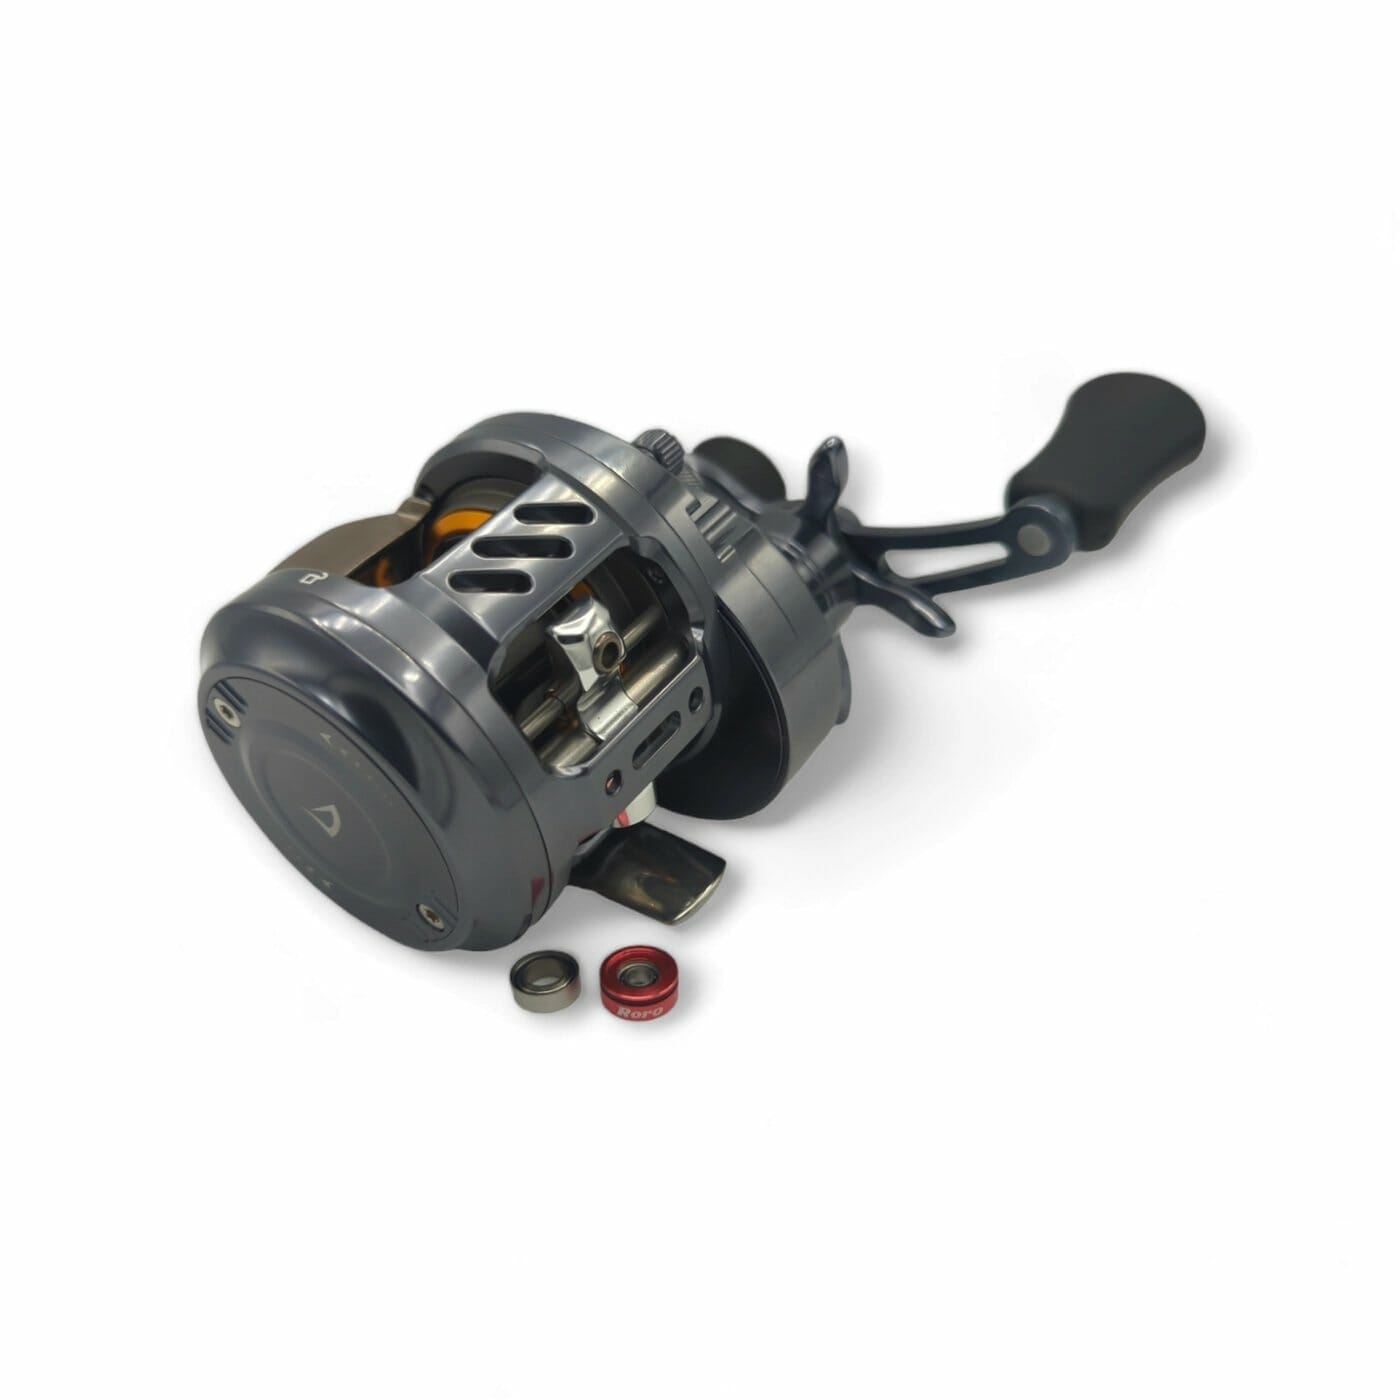 Roro Ceramic Hybrid Bearing Kit for iFishband Tender Shoot Round